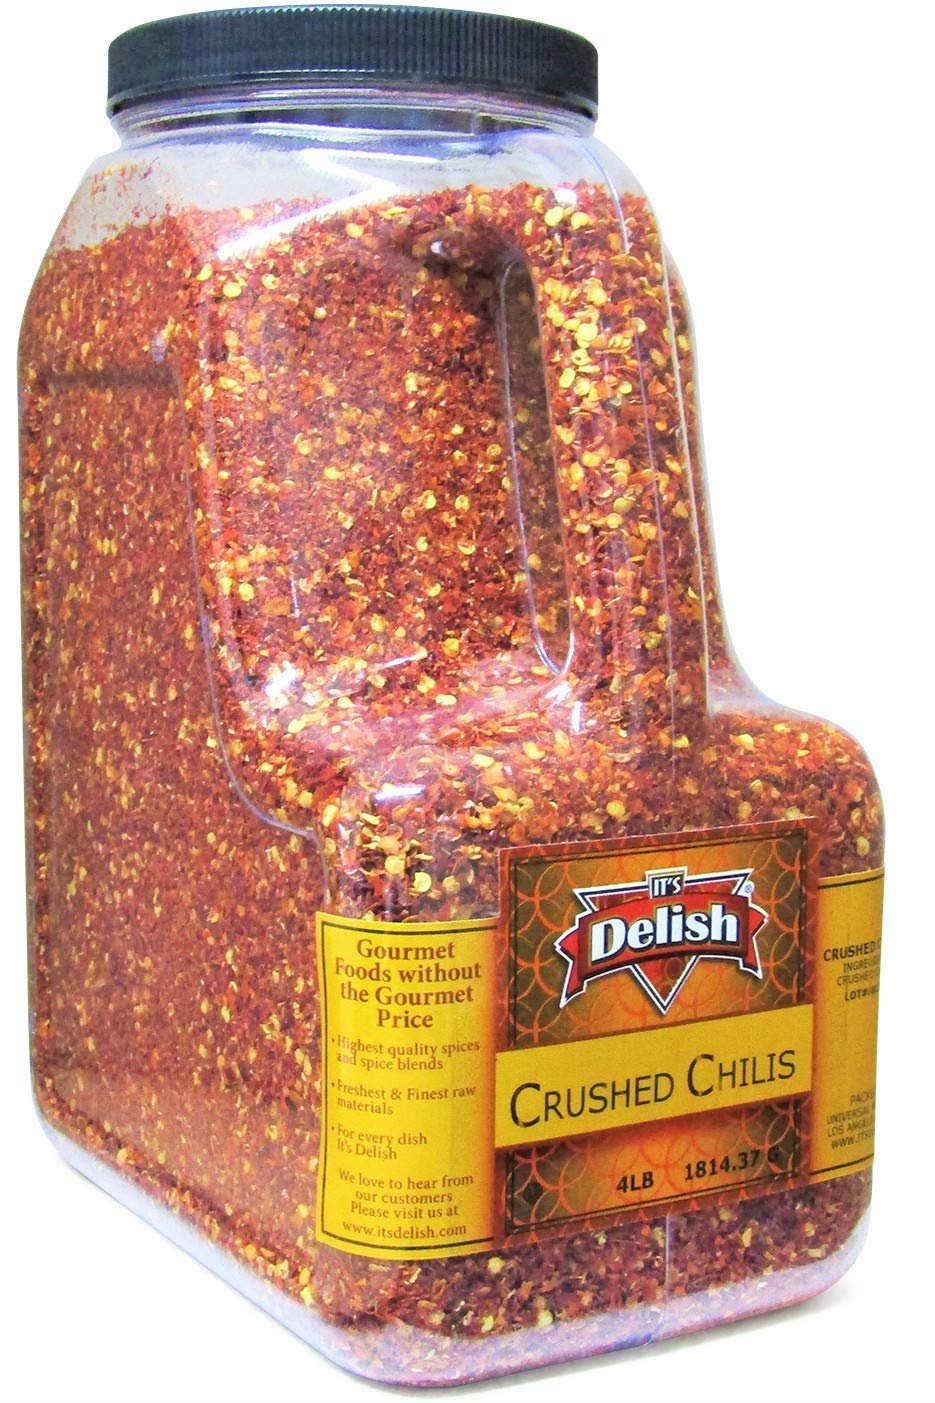 Its Delish No Salt Seasoning - 9 oz